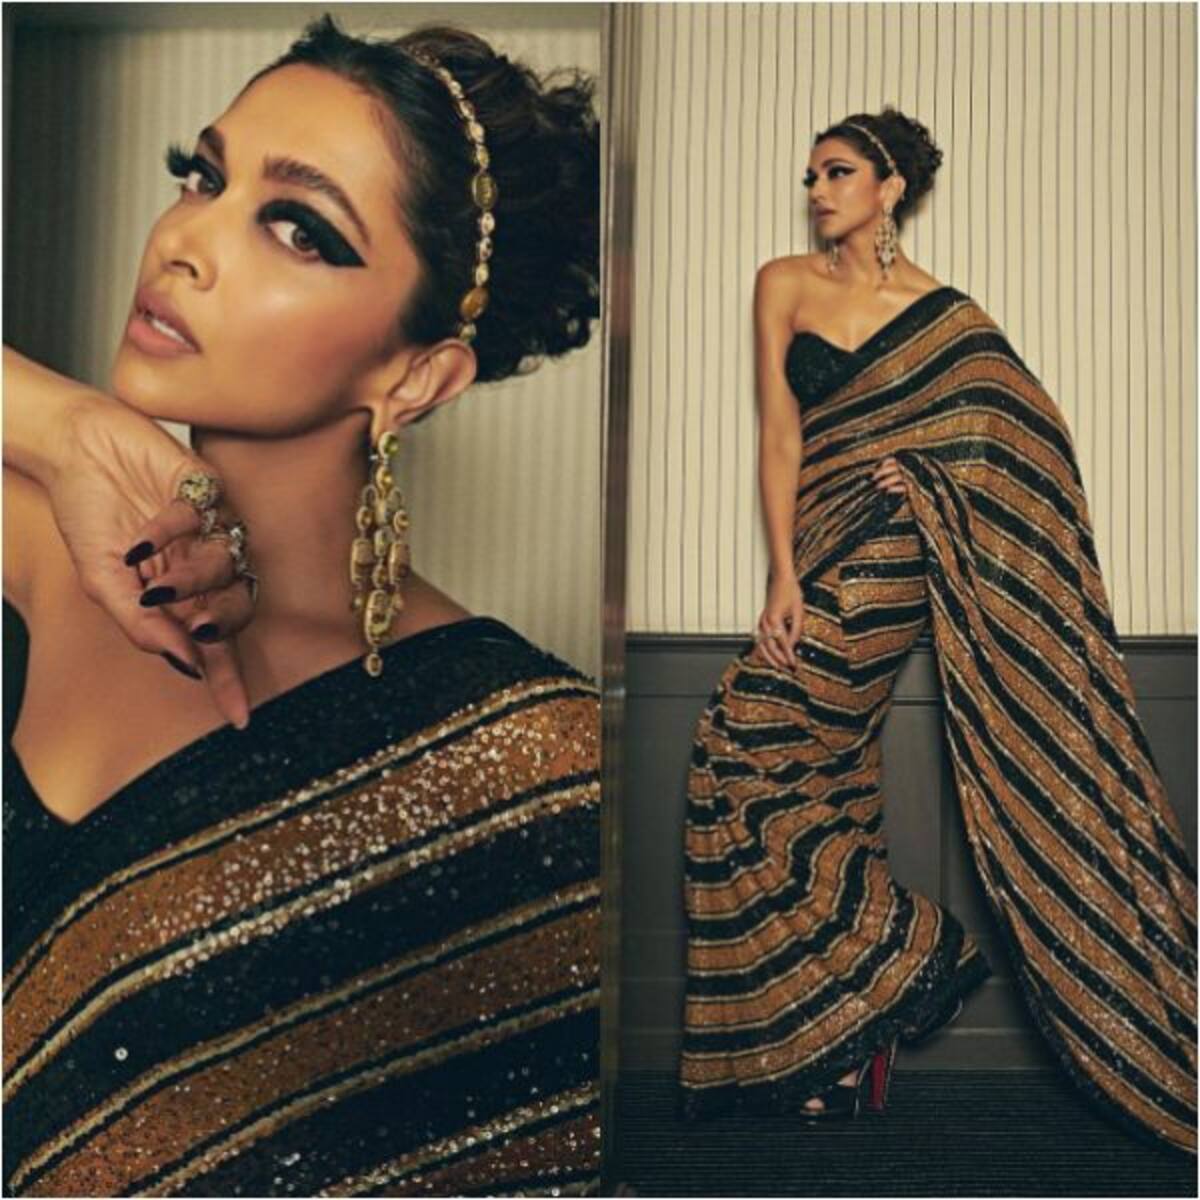 Deepika Padukone stuns in an ivory sari at Cannes Film Festival